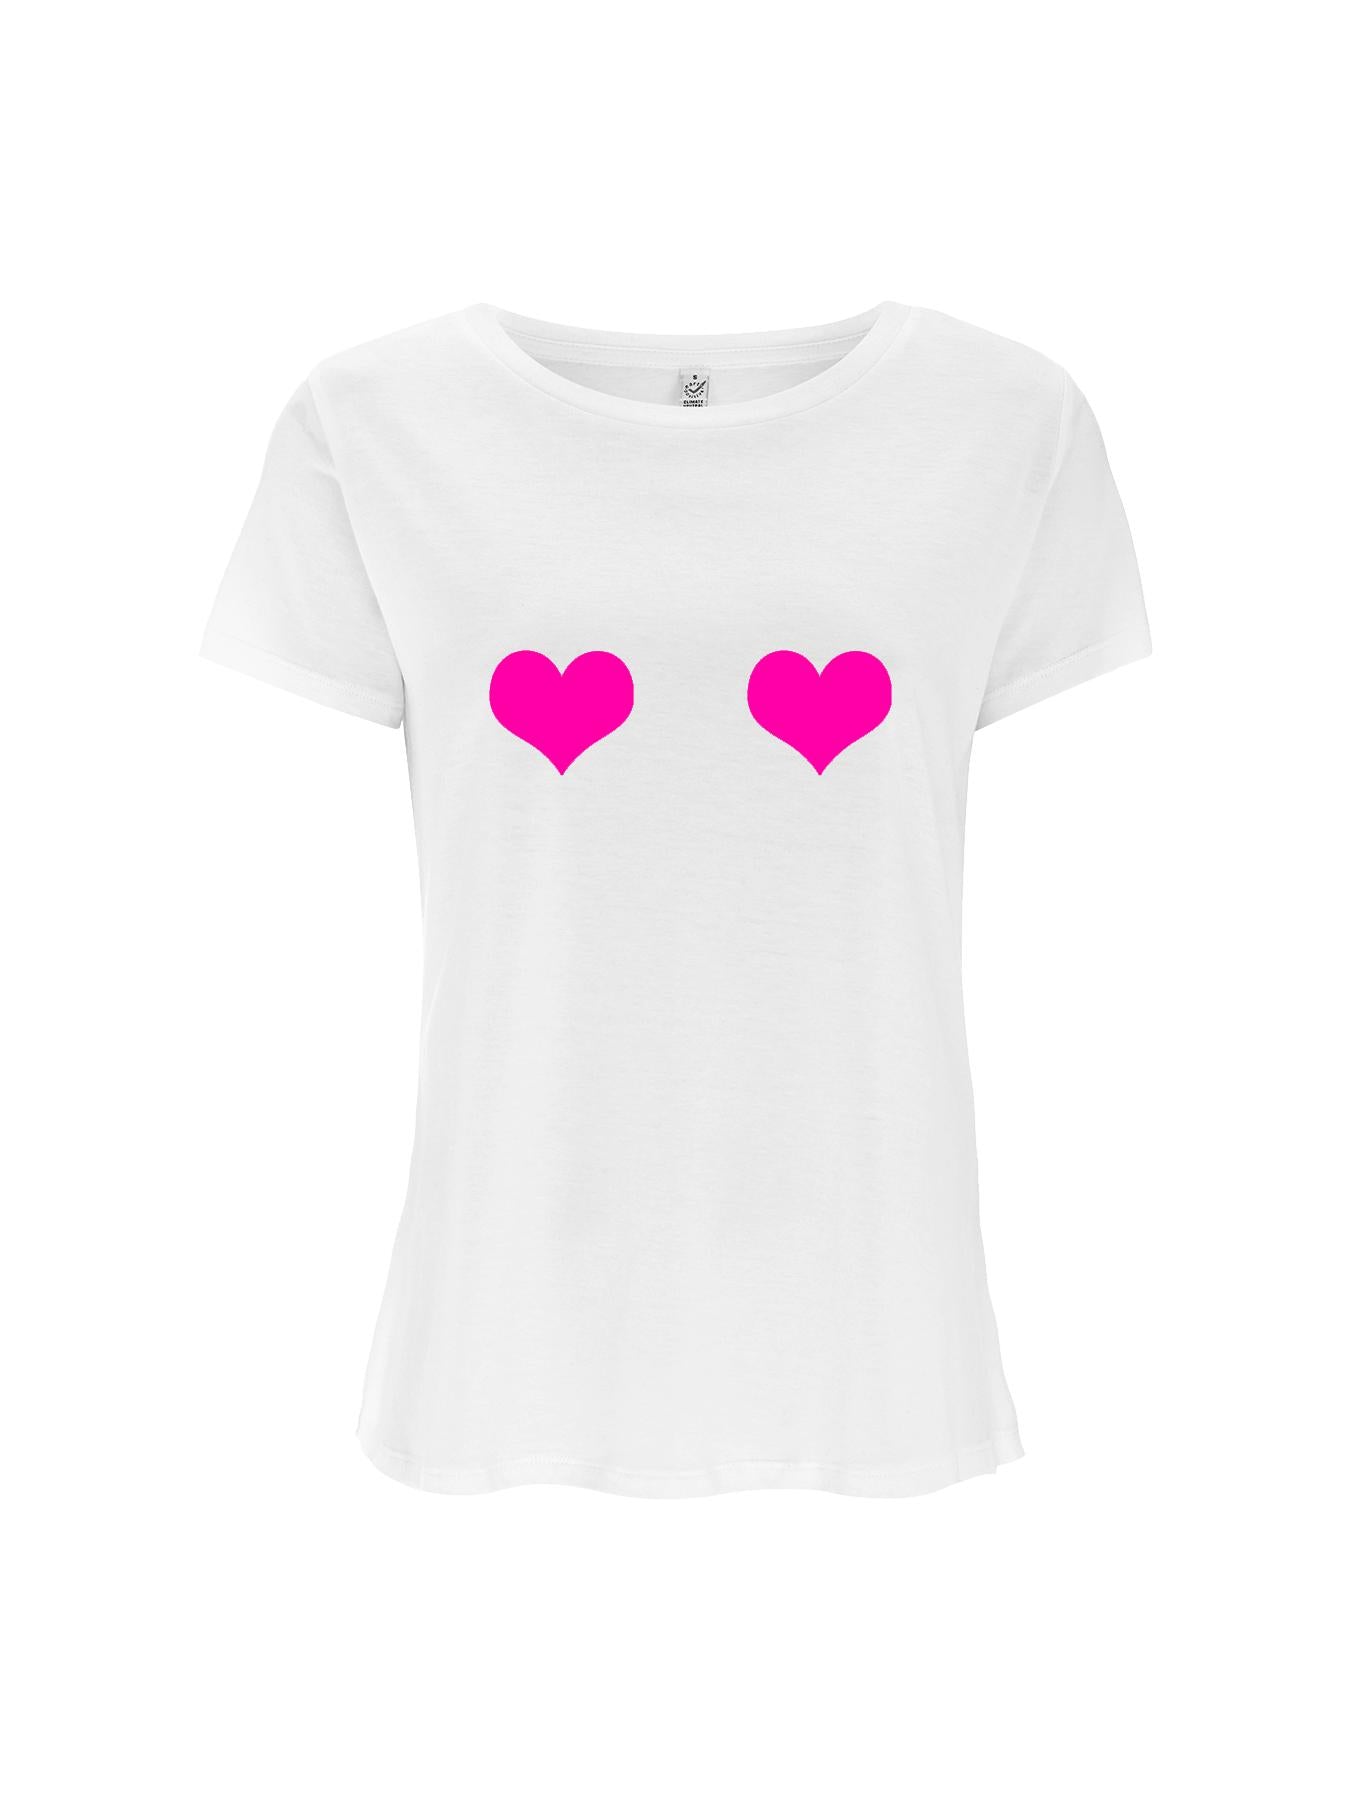 HEARTS T shirt